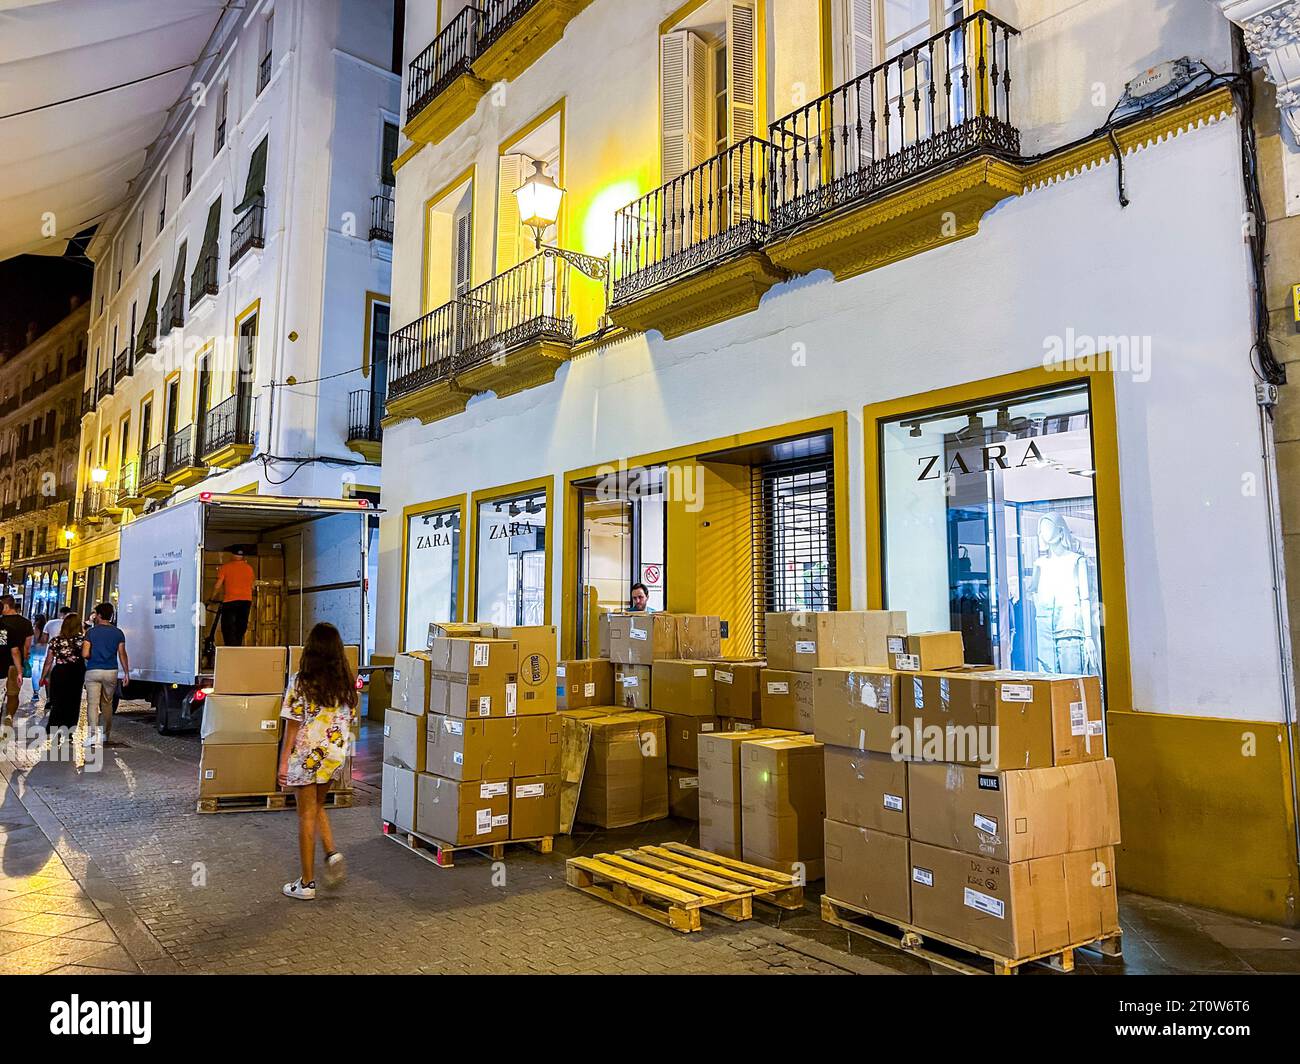 Seville, Spain, Street Scene, Fast Fashion Clothing Industry, UnLoading Boxes at Night, Zara Company Stock Photo